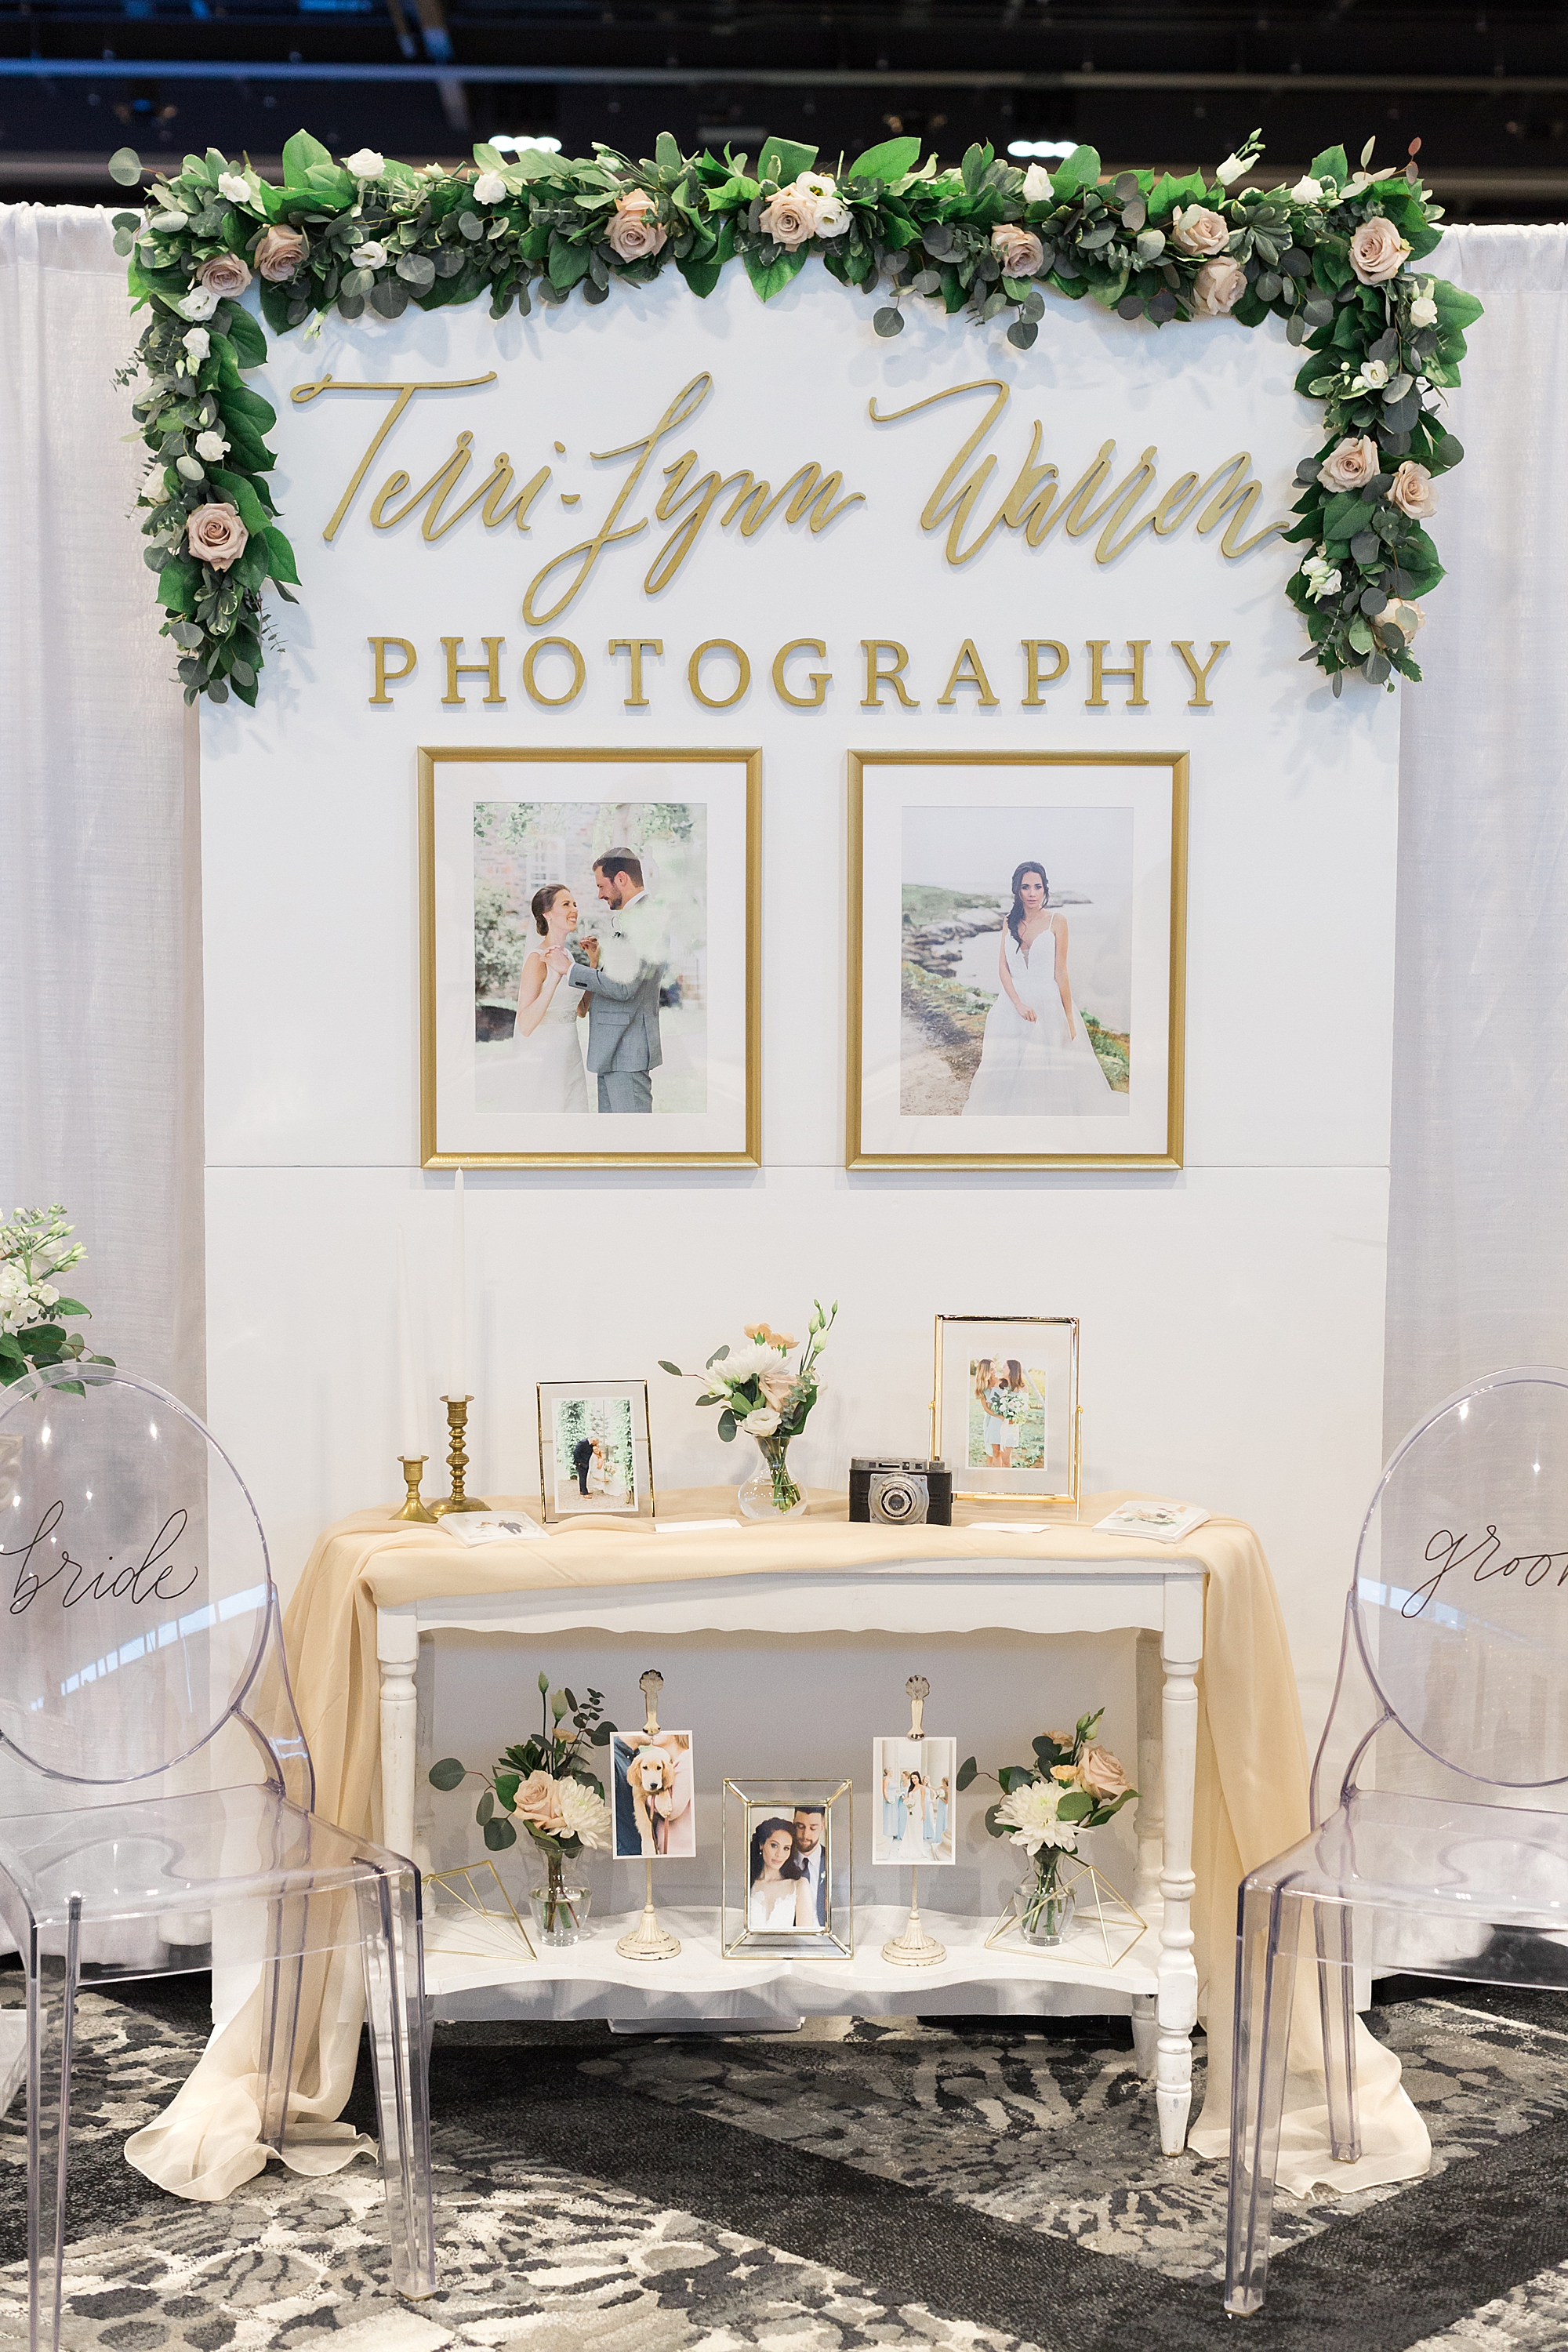 Wedding Photography Bridal Show Booth Display